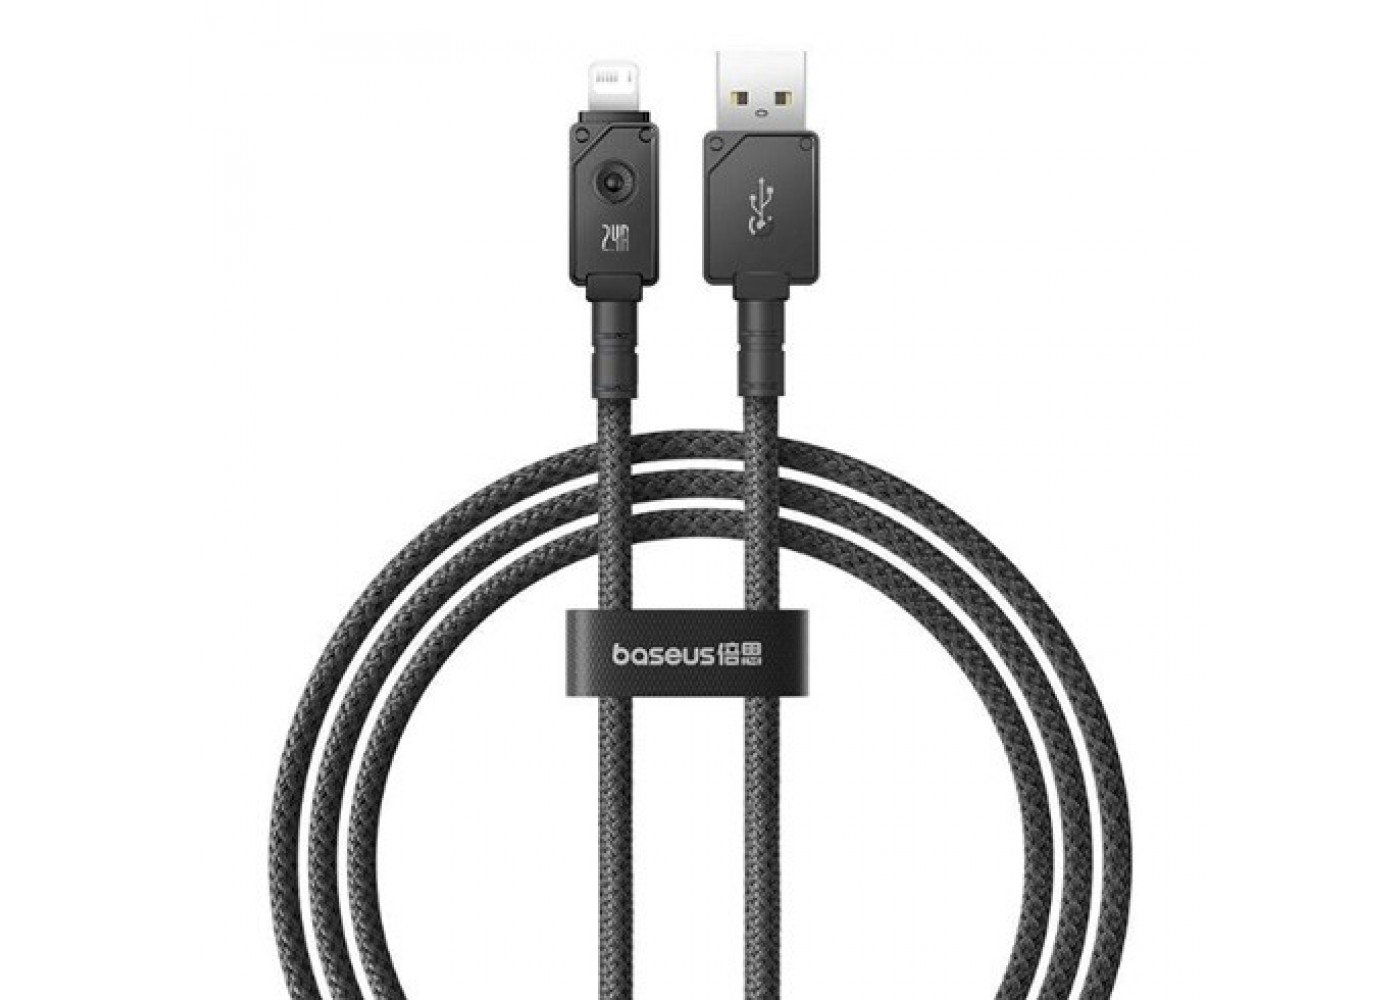 Кабель Baseus Unbreakable Series Fast Charging Data Cable USB to iP 2.4A 1m, Чёрный (P10355802111-00)